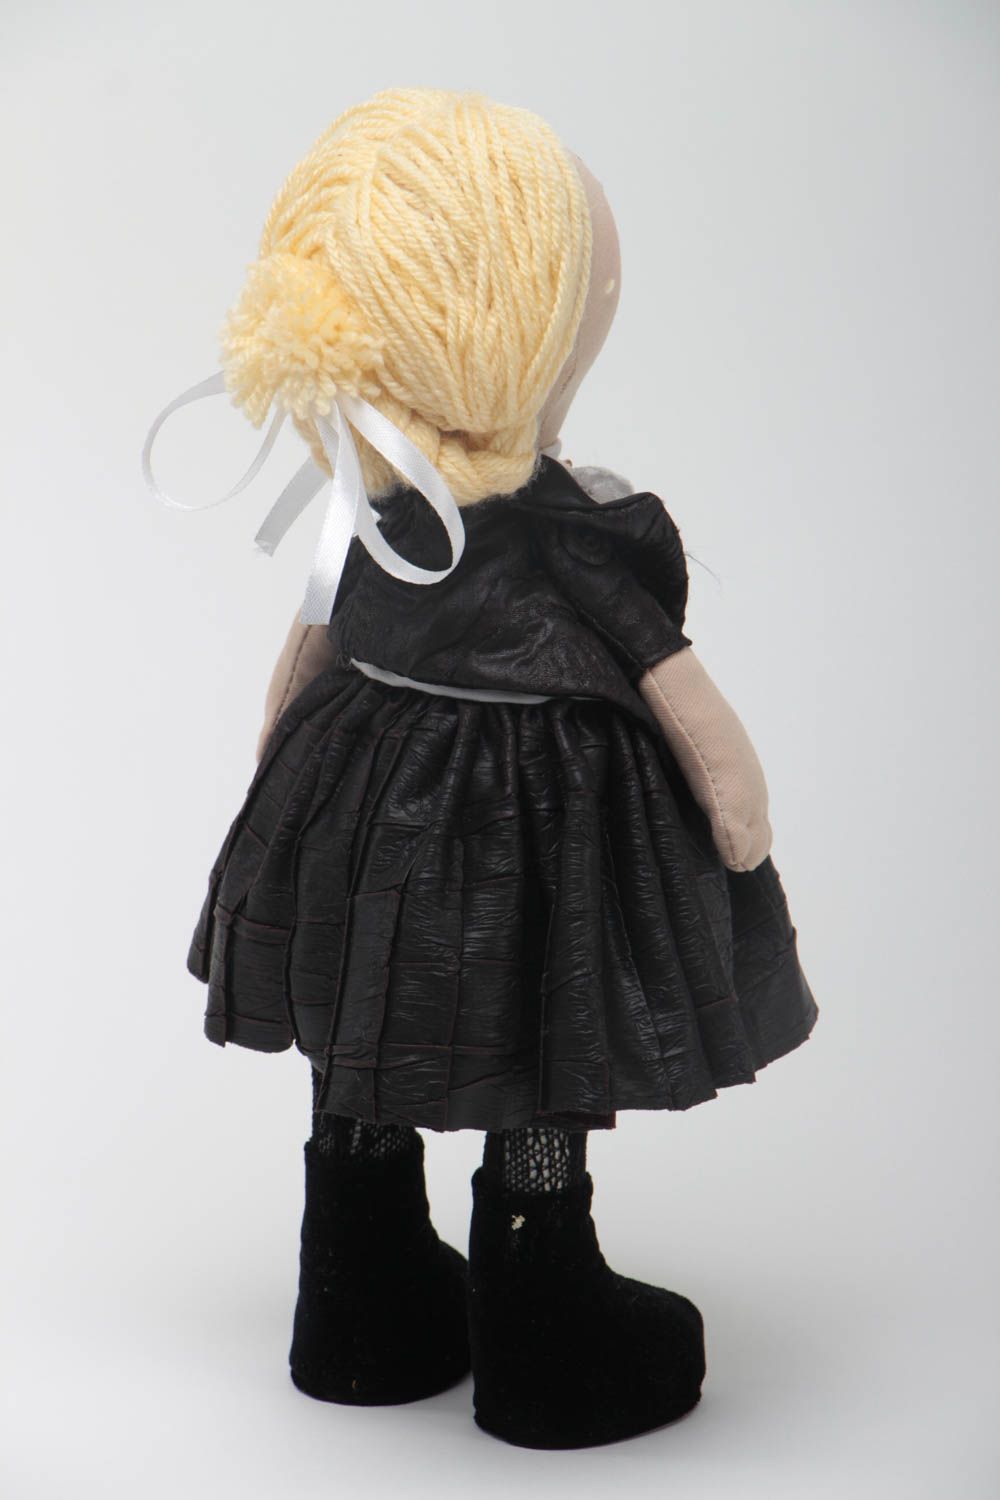 Handmade designer doll unusual textile interior decor cute small soft toy photo 4